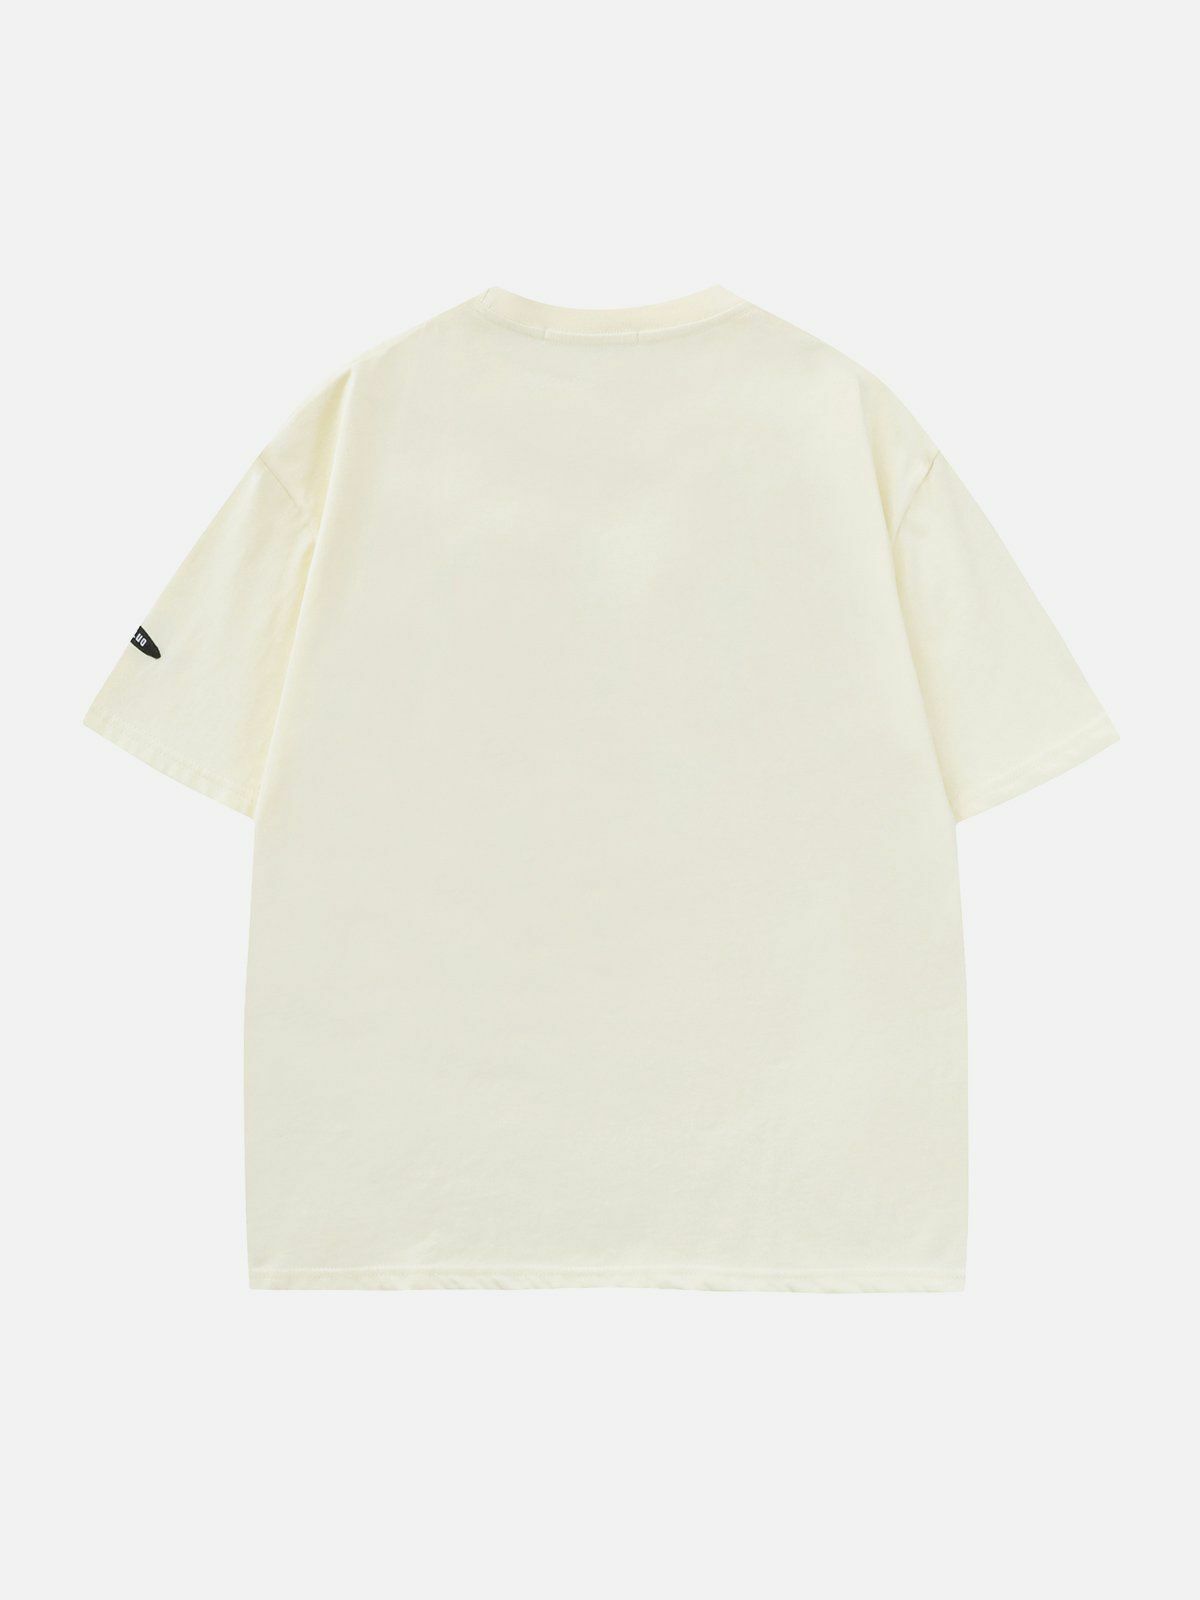 vibrant blurring design tee youthful  edgy streetwear shirt 6712